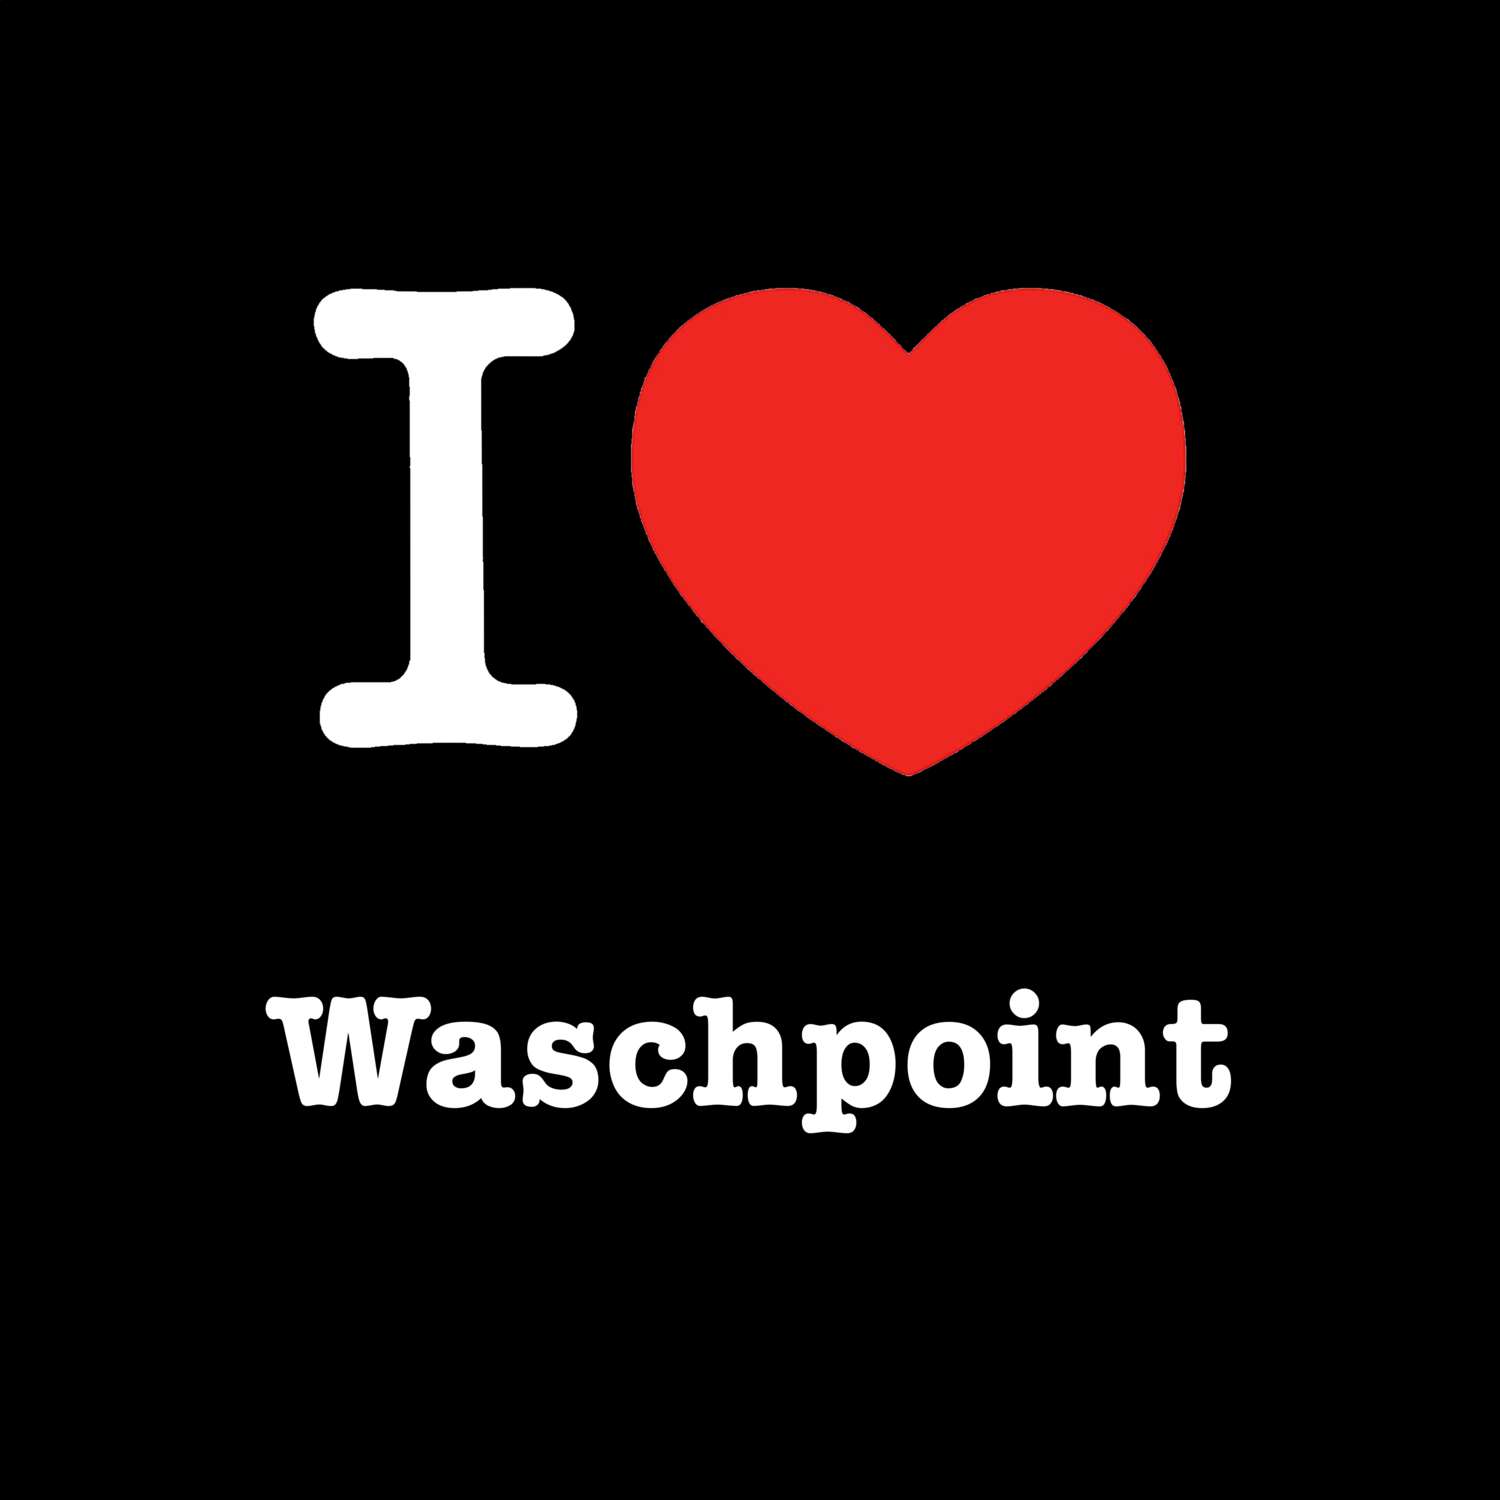 Waschpoint T-Shirt »I love«